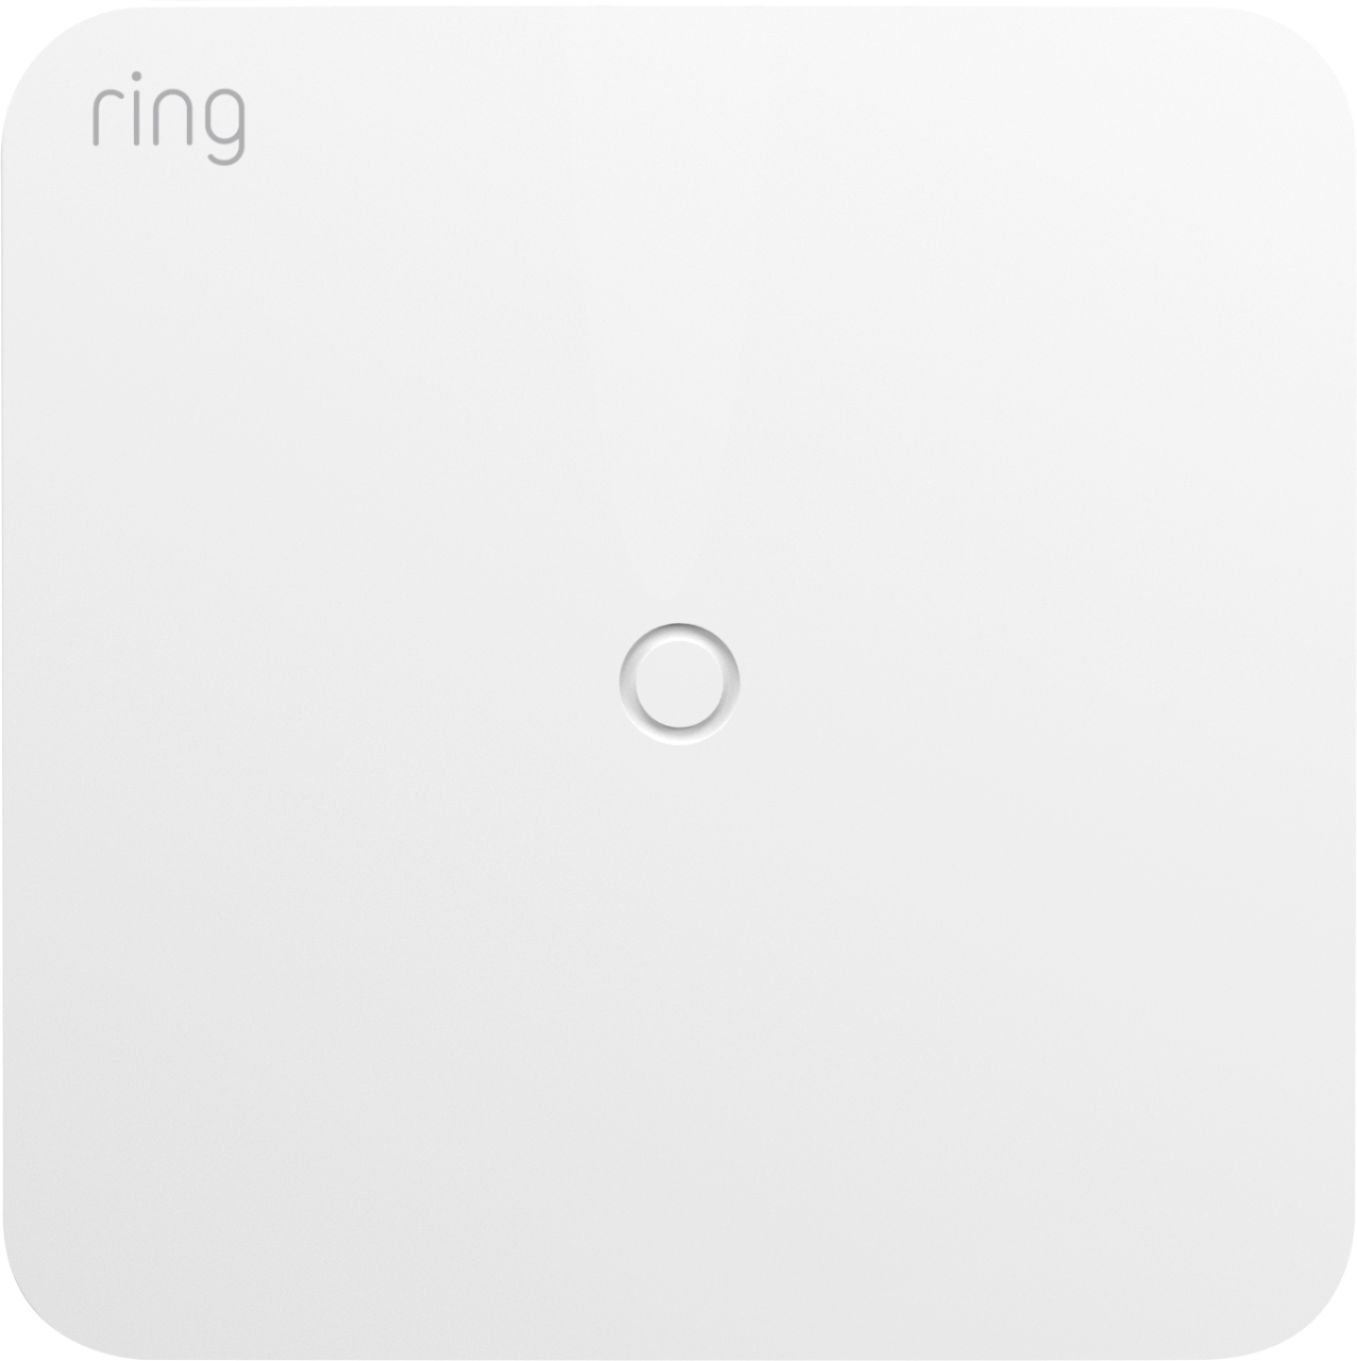 Ring - Retrofit Alarm Kit - White